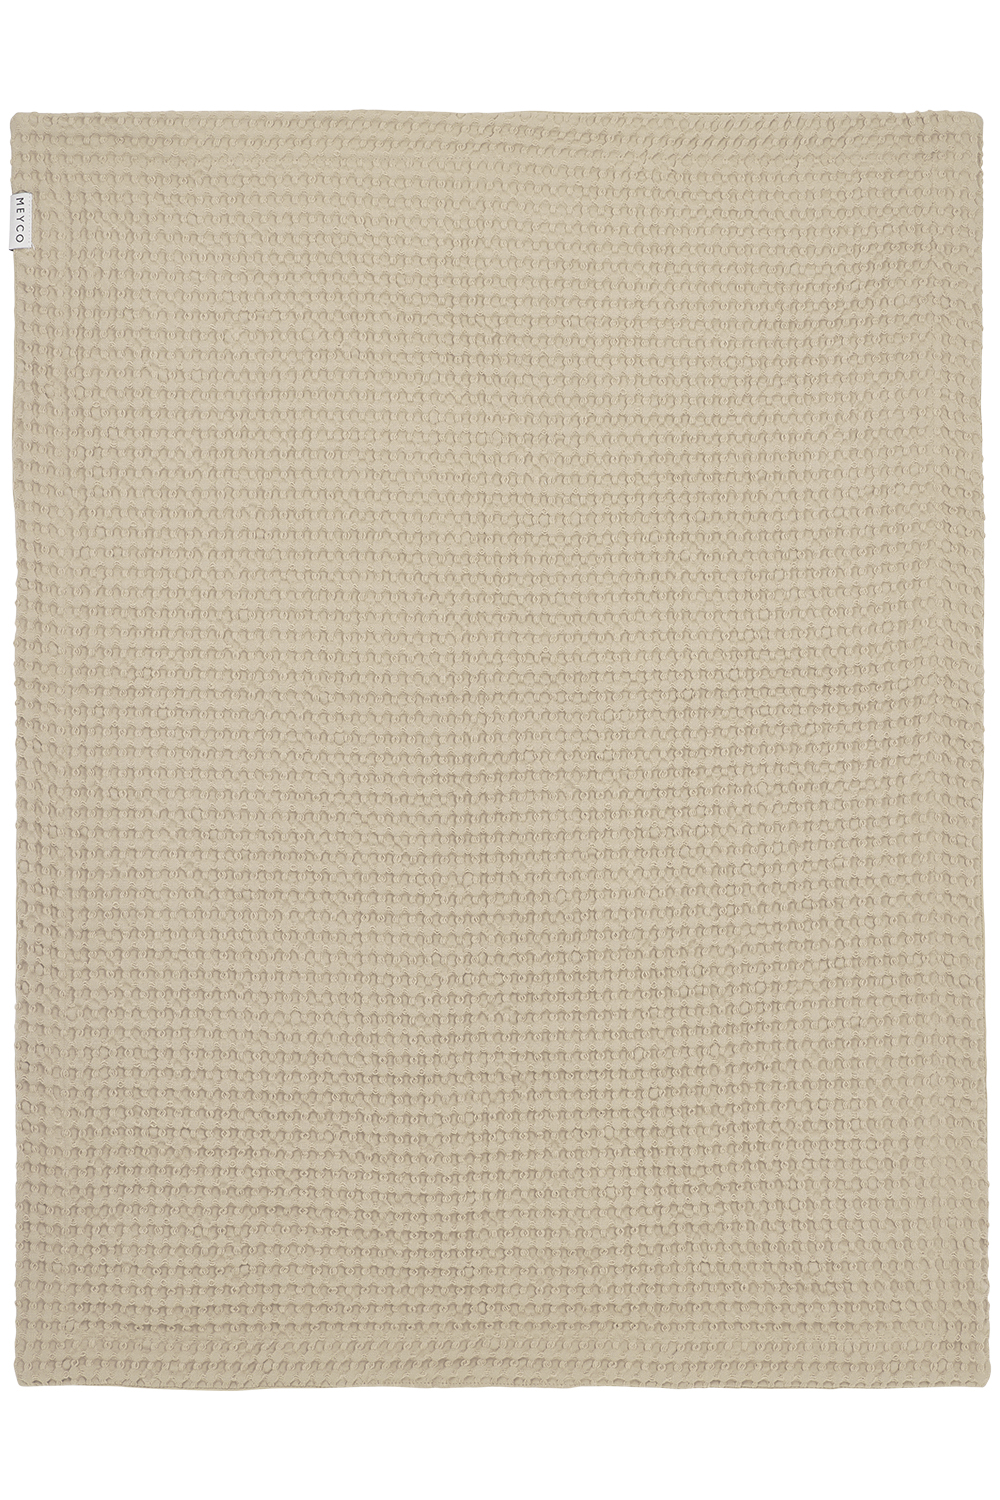 Crib bed blanket Waffle Cotton - sand - 75x100cm